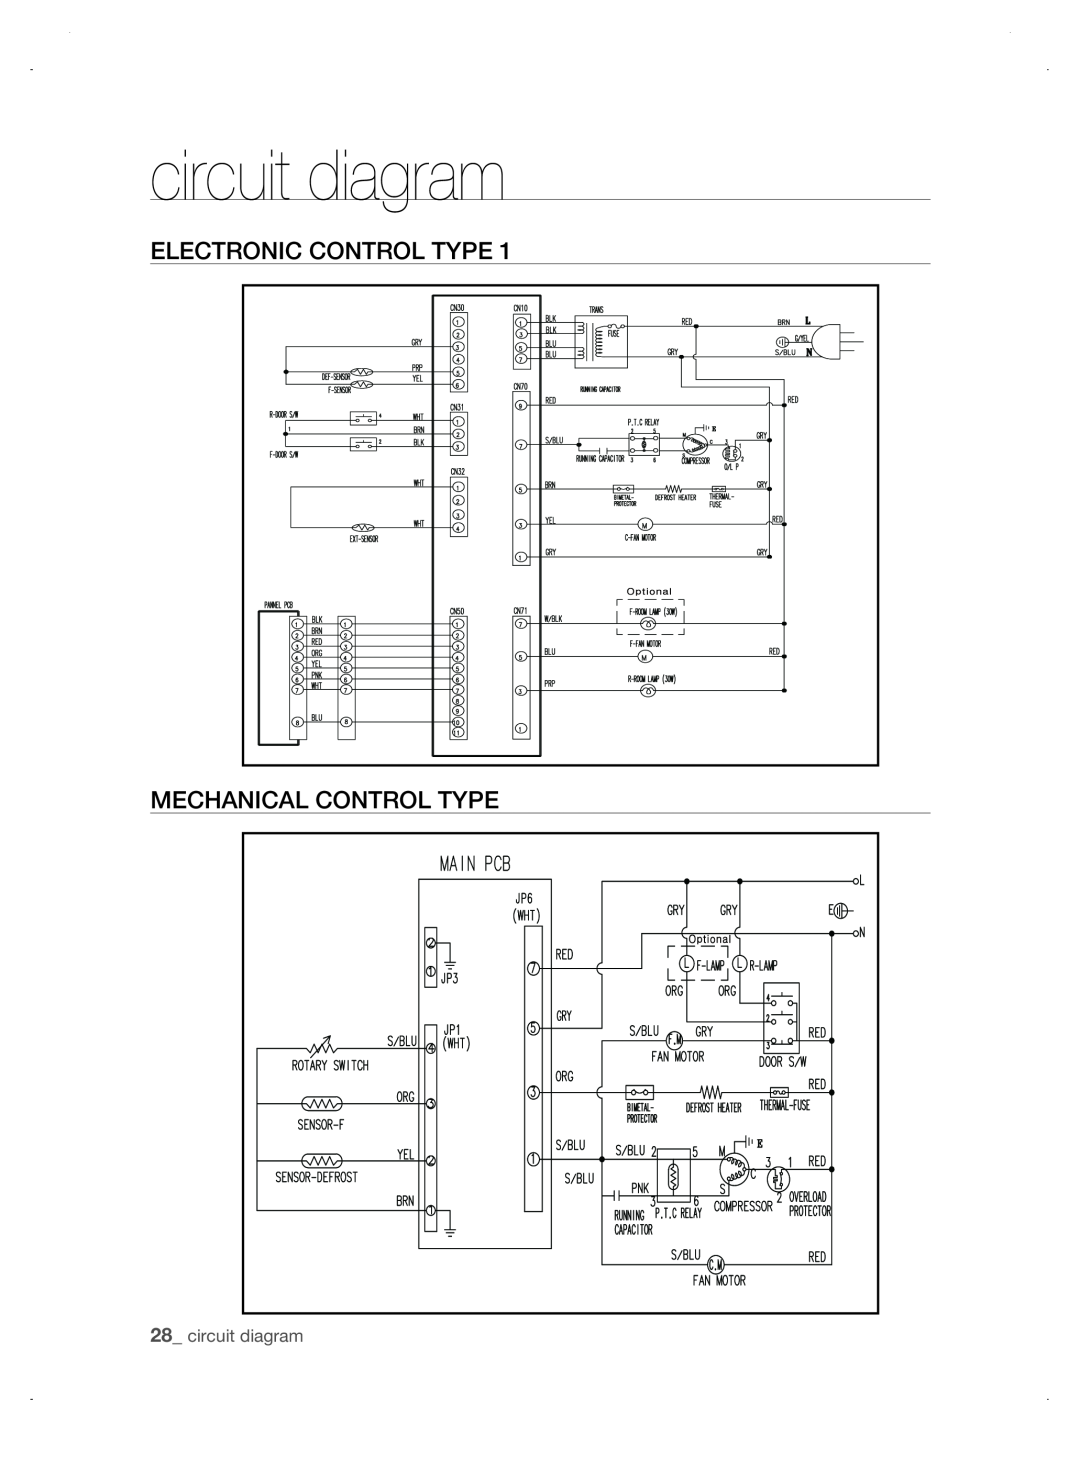 Samsung DA99-01906A user manual circuit diagram, ELECtroniC ControL tyPE MECHaniCaL ControL tyPE 